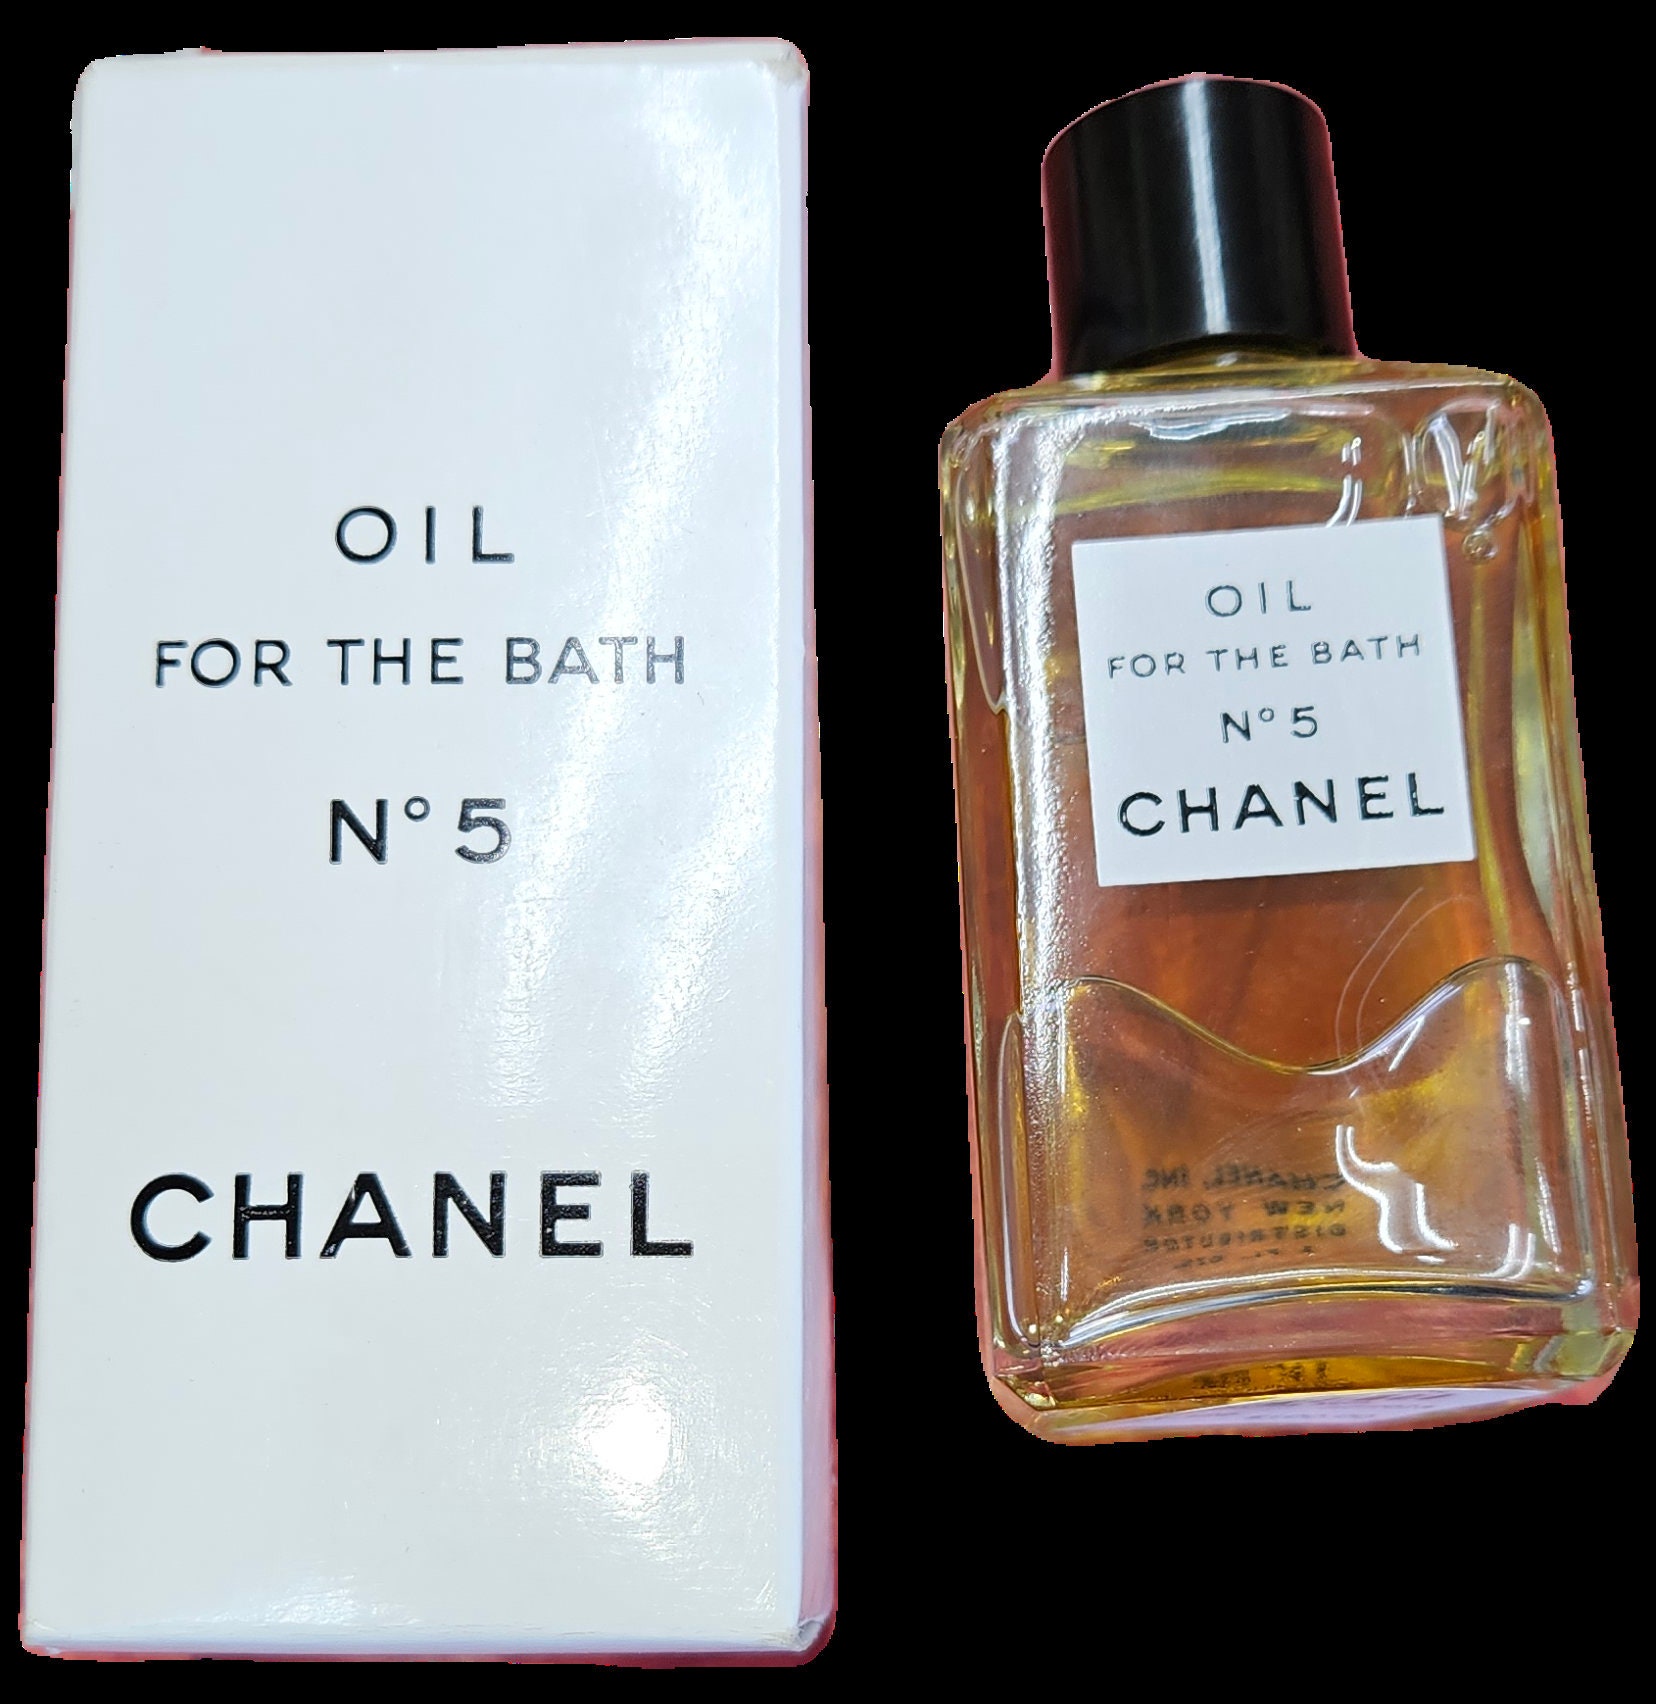 CHANEL Bath Oils for sale